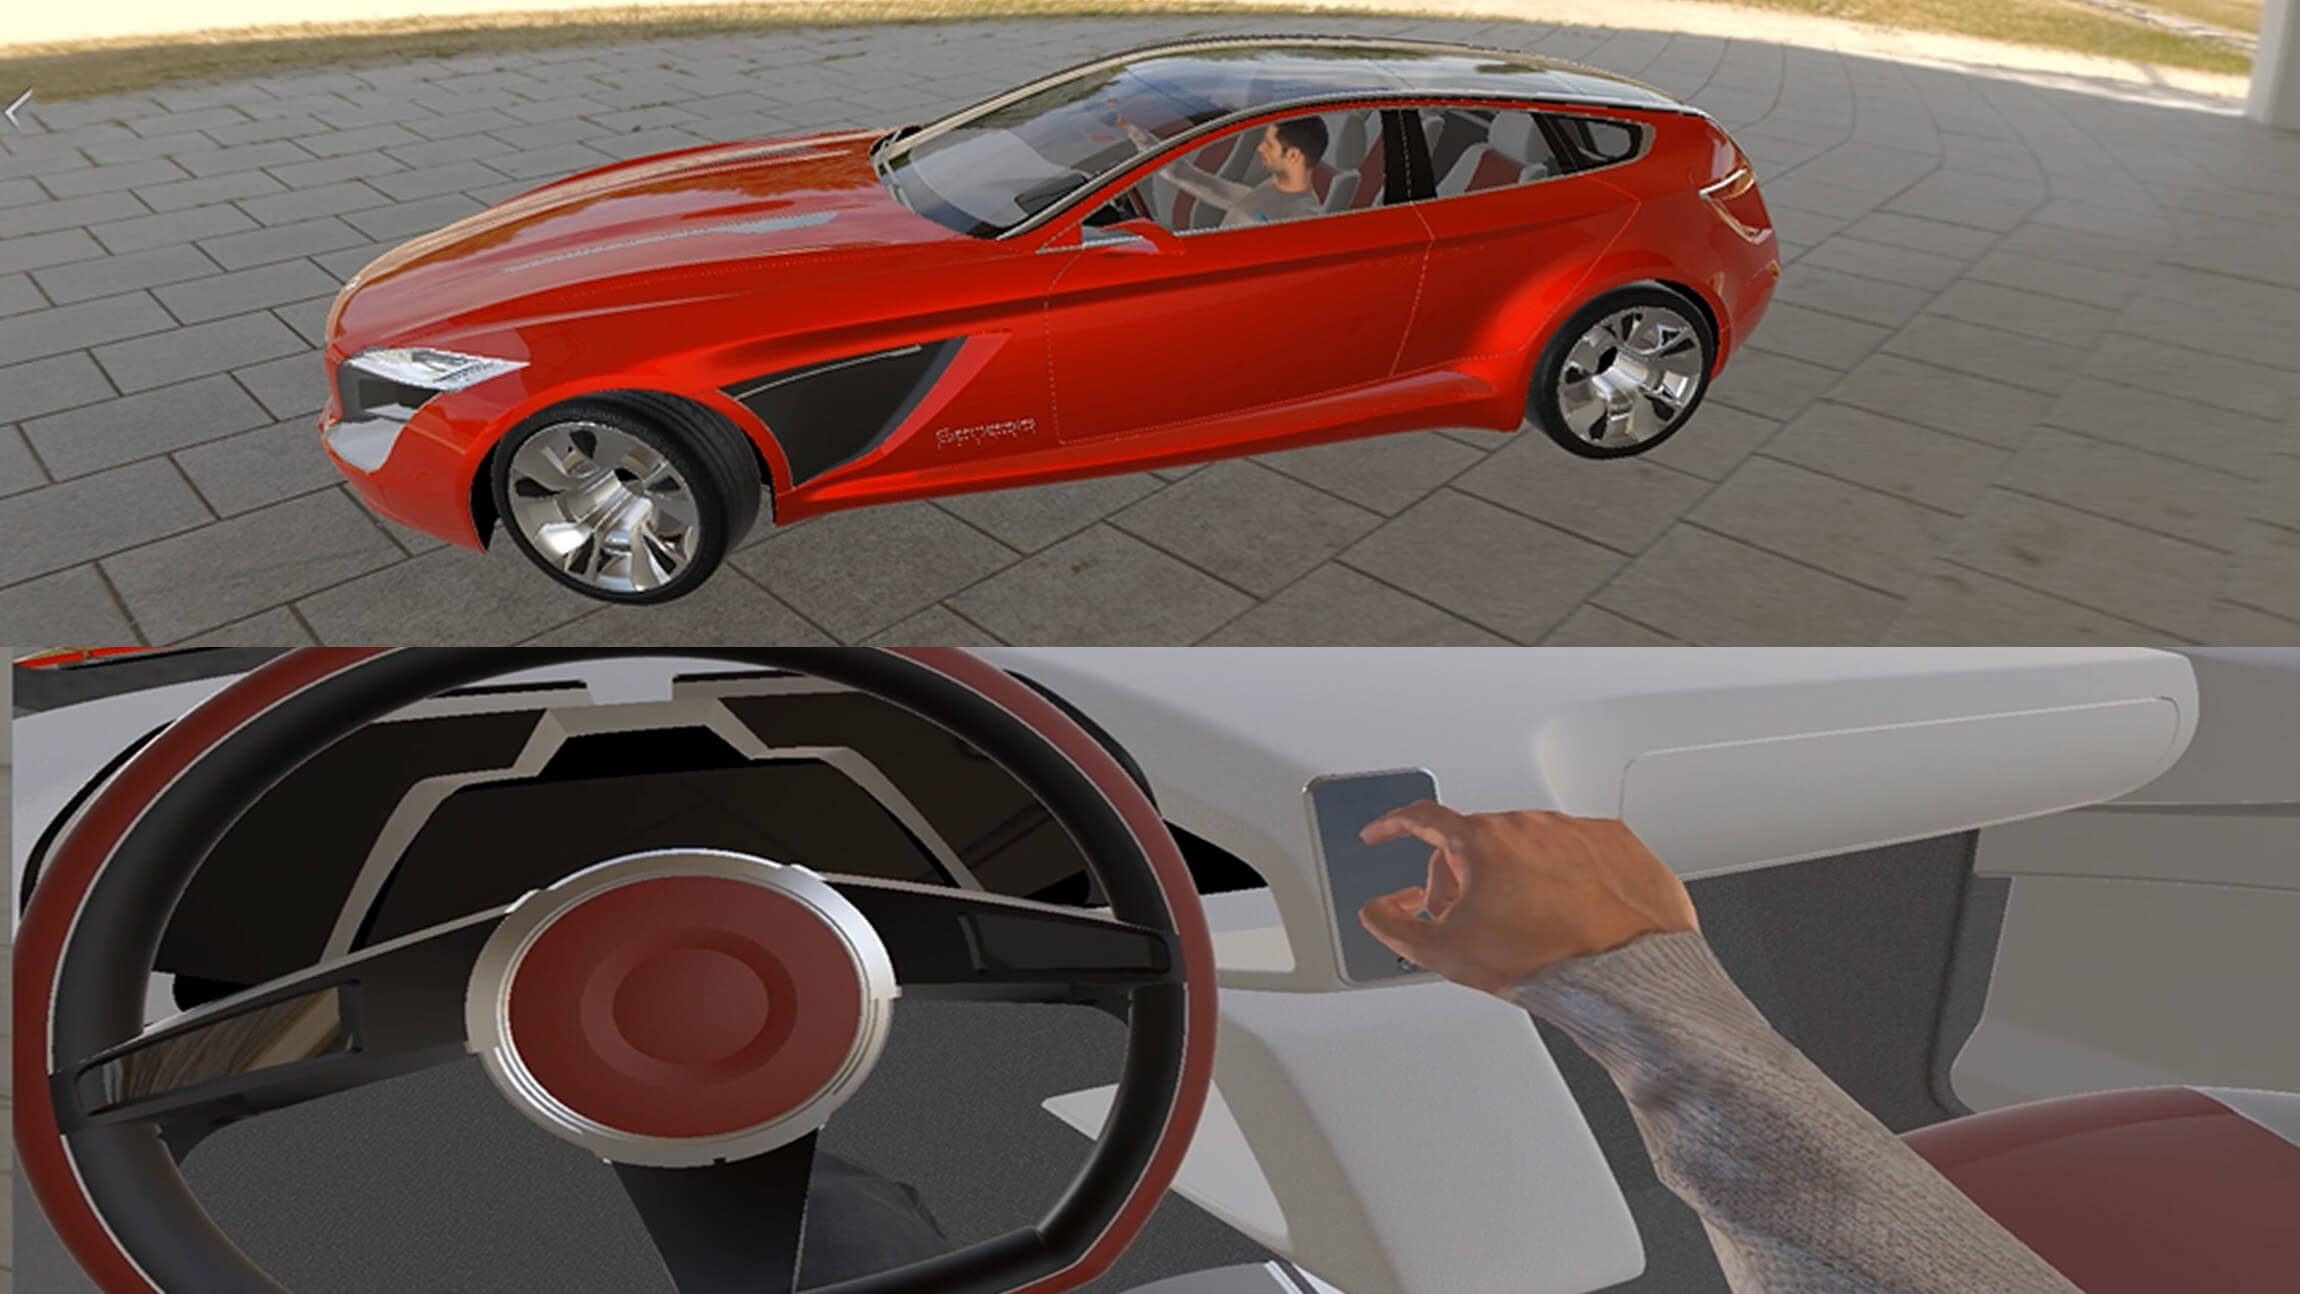 Using VR for cockpit ergonomics